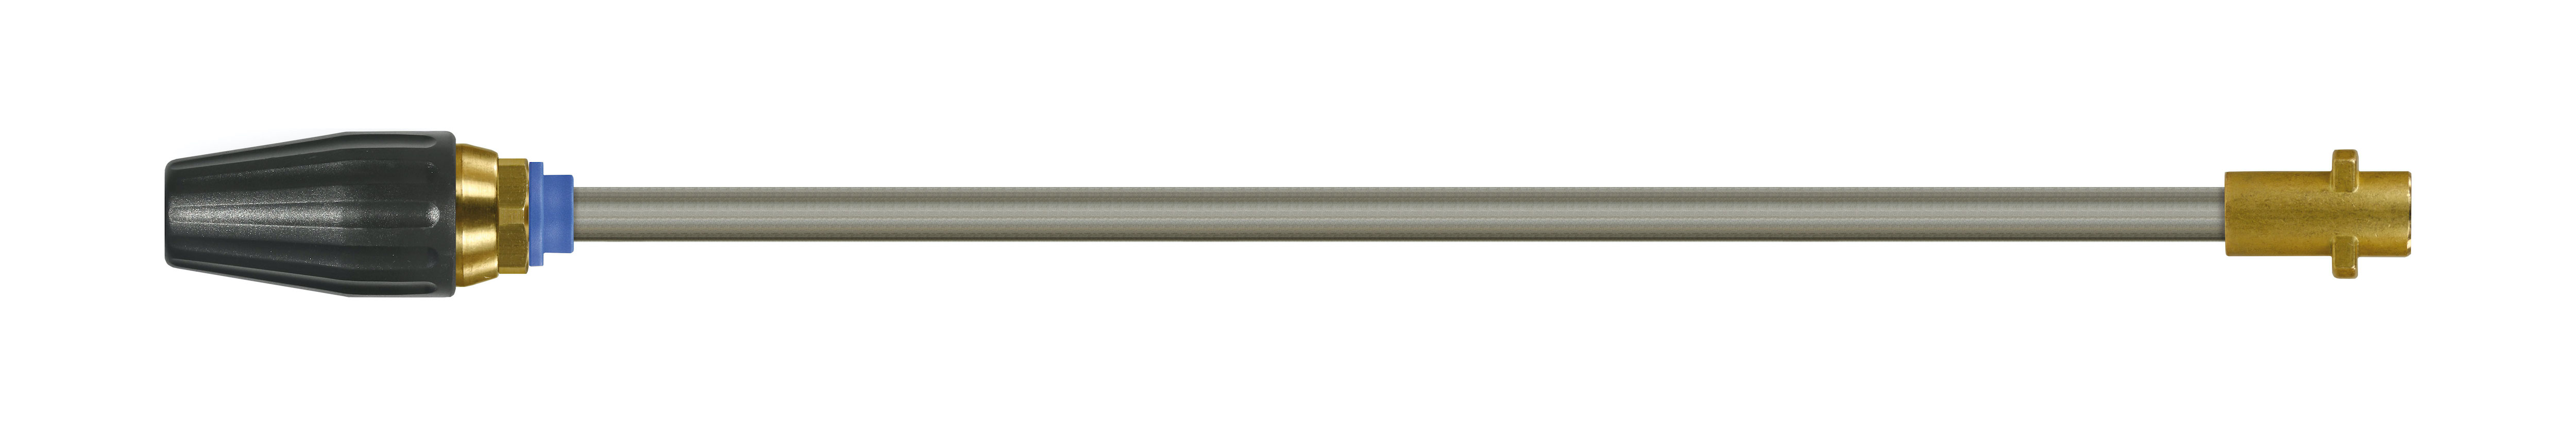 Rotabuse céramique avec lance 430mm, 100-250 bar, Calibre 030.